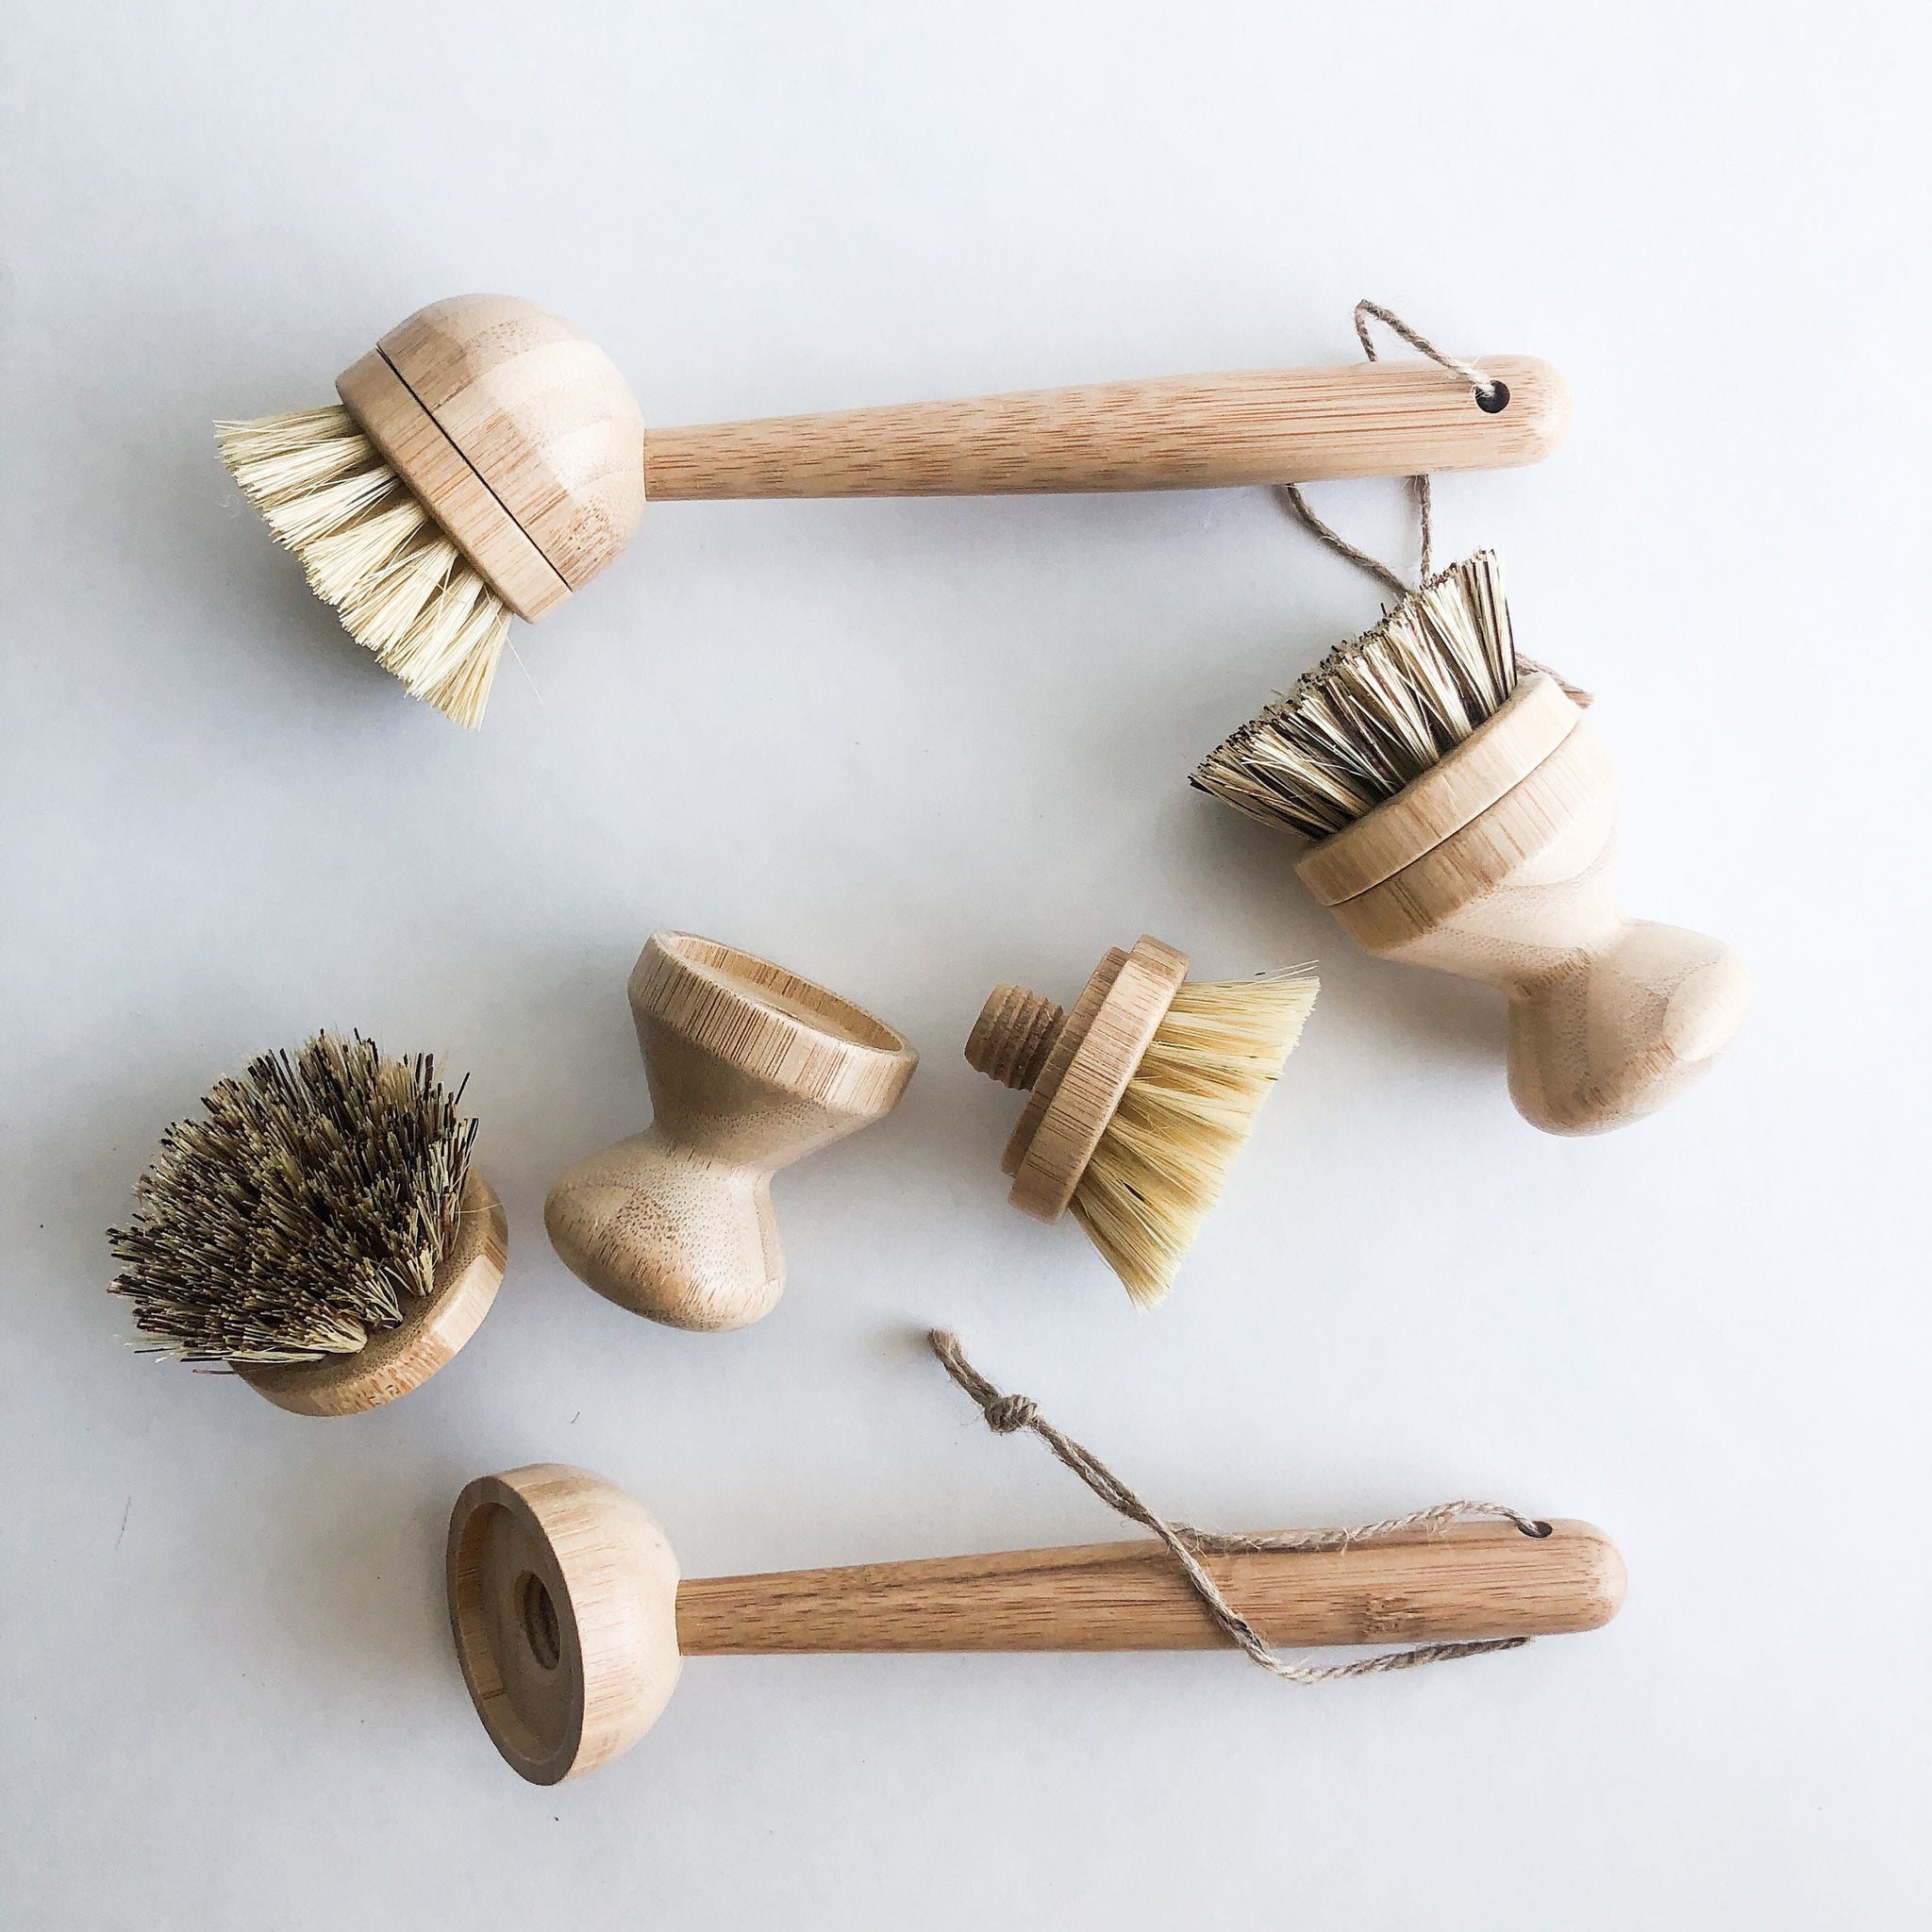 Bamboo & Sisal Palm Dish Brush – Refillism